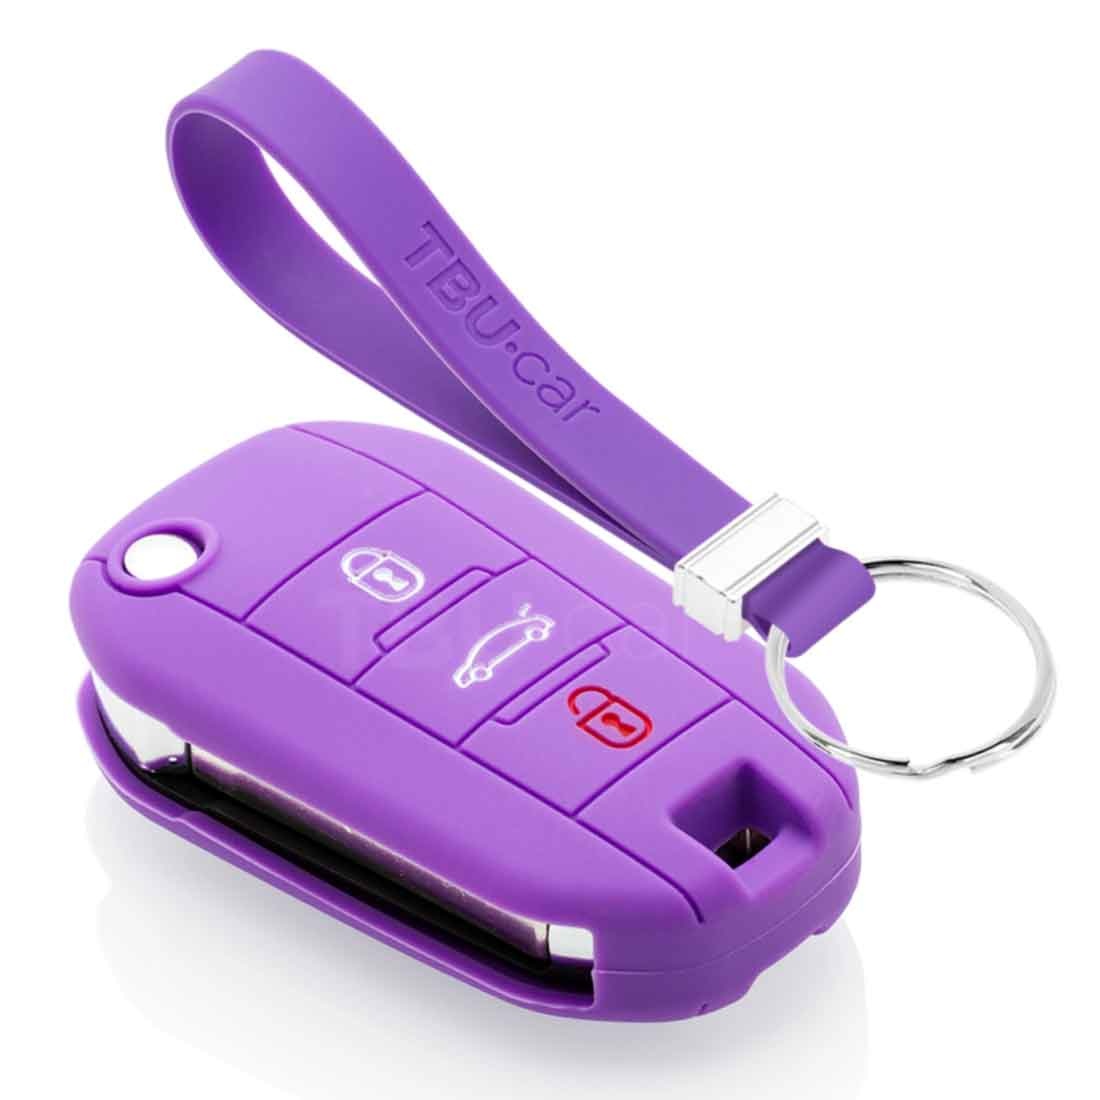 TBU car TBU car Autoschlüssel Hülle kompatibel mit Peugeot 3 Tasten - Schutzhülle aus Silikon - Auto Schlüsselhülle Cover in Violett